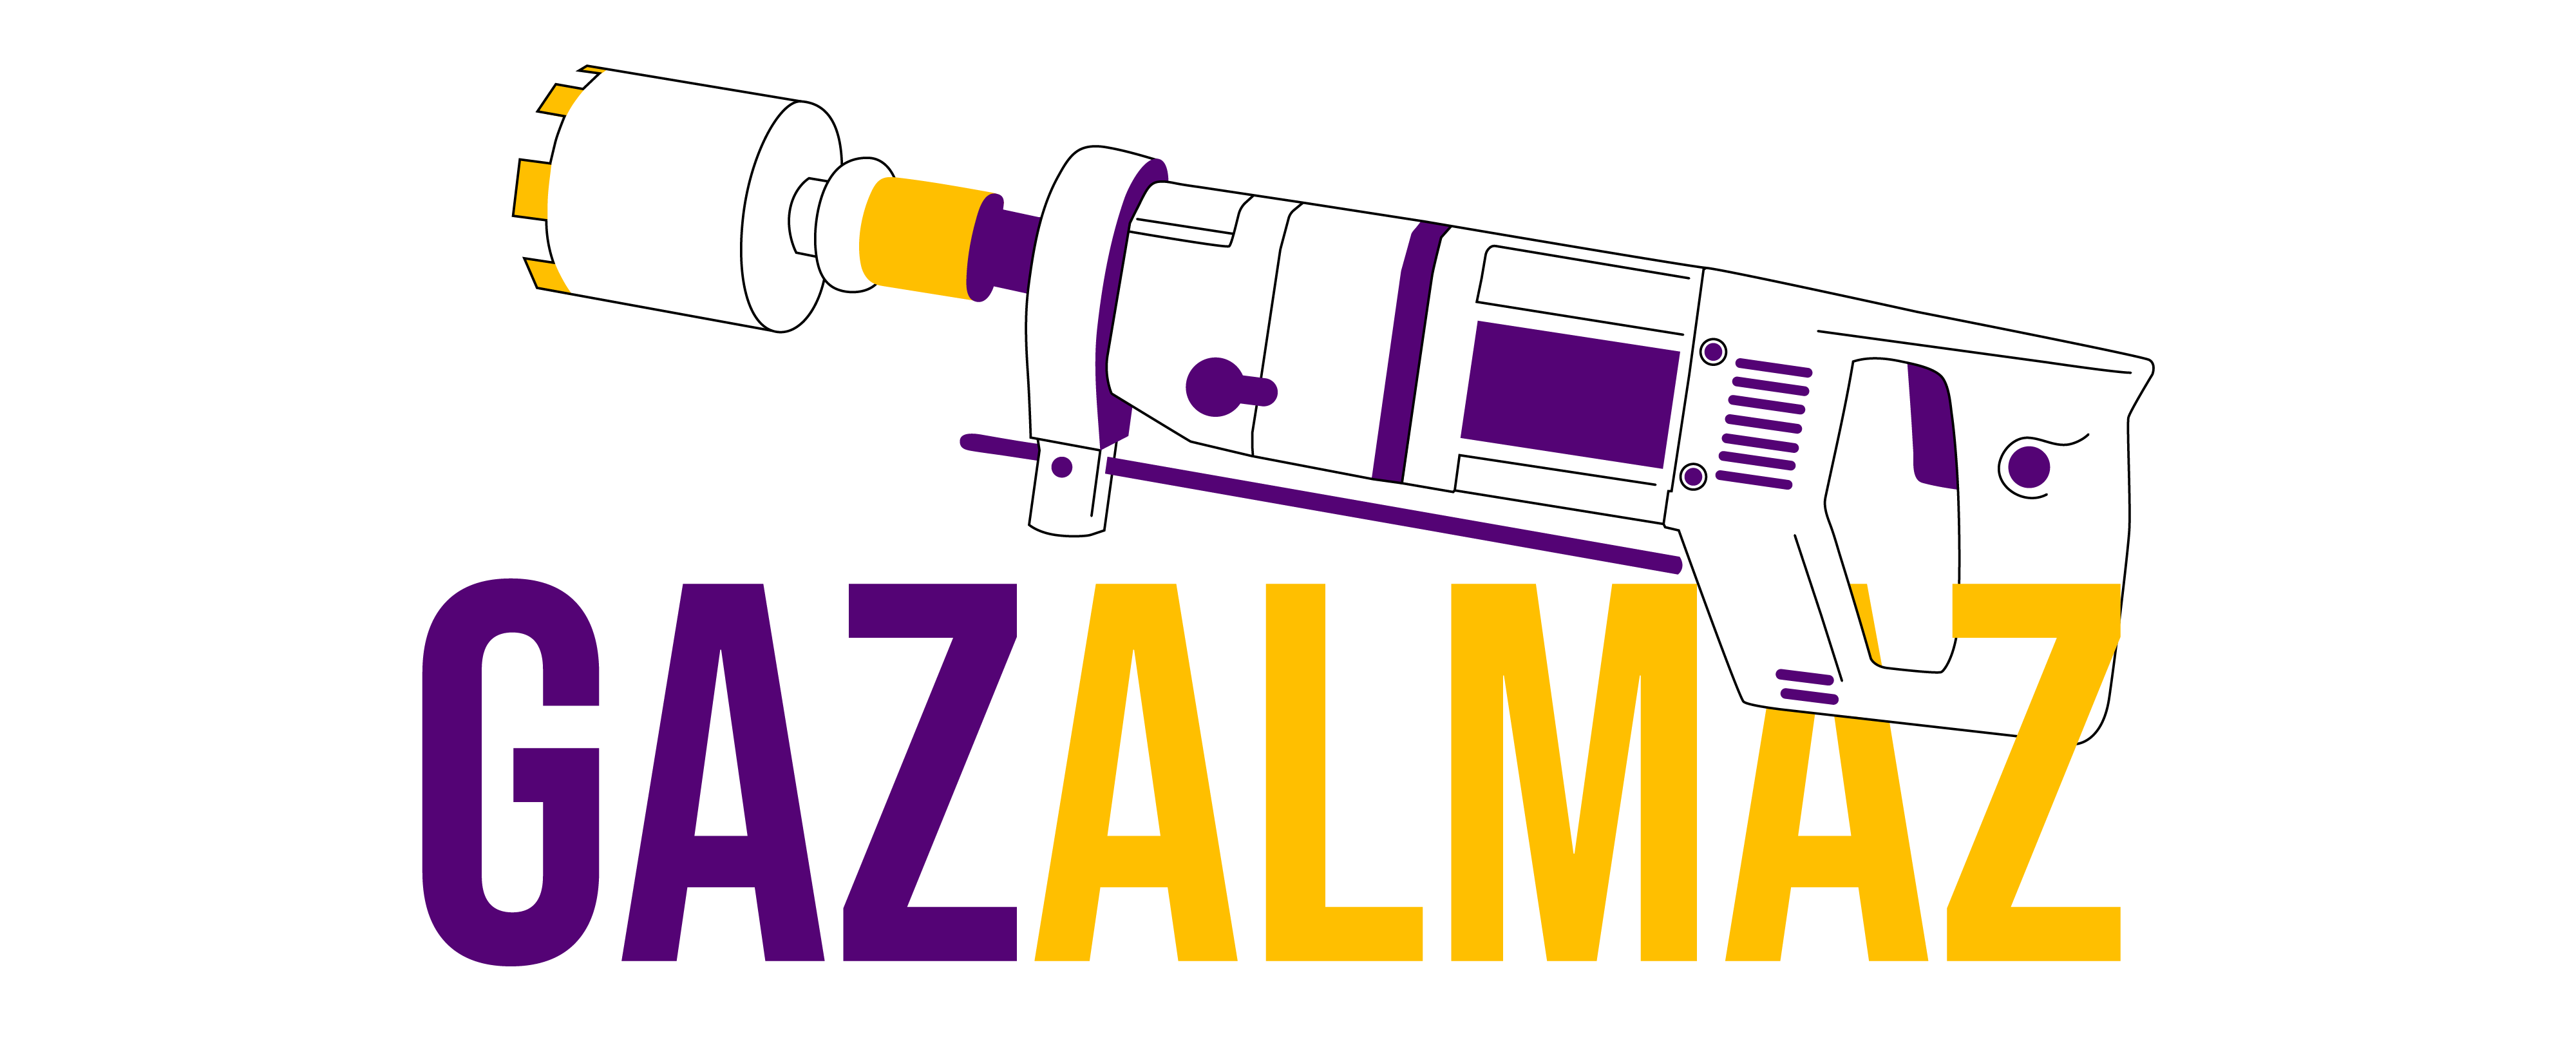 GAZALMAZ